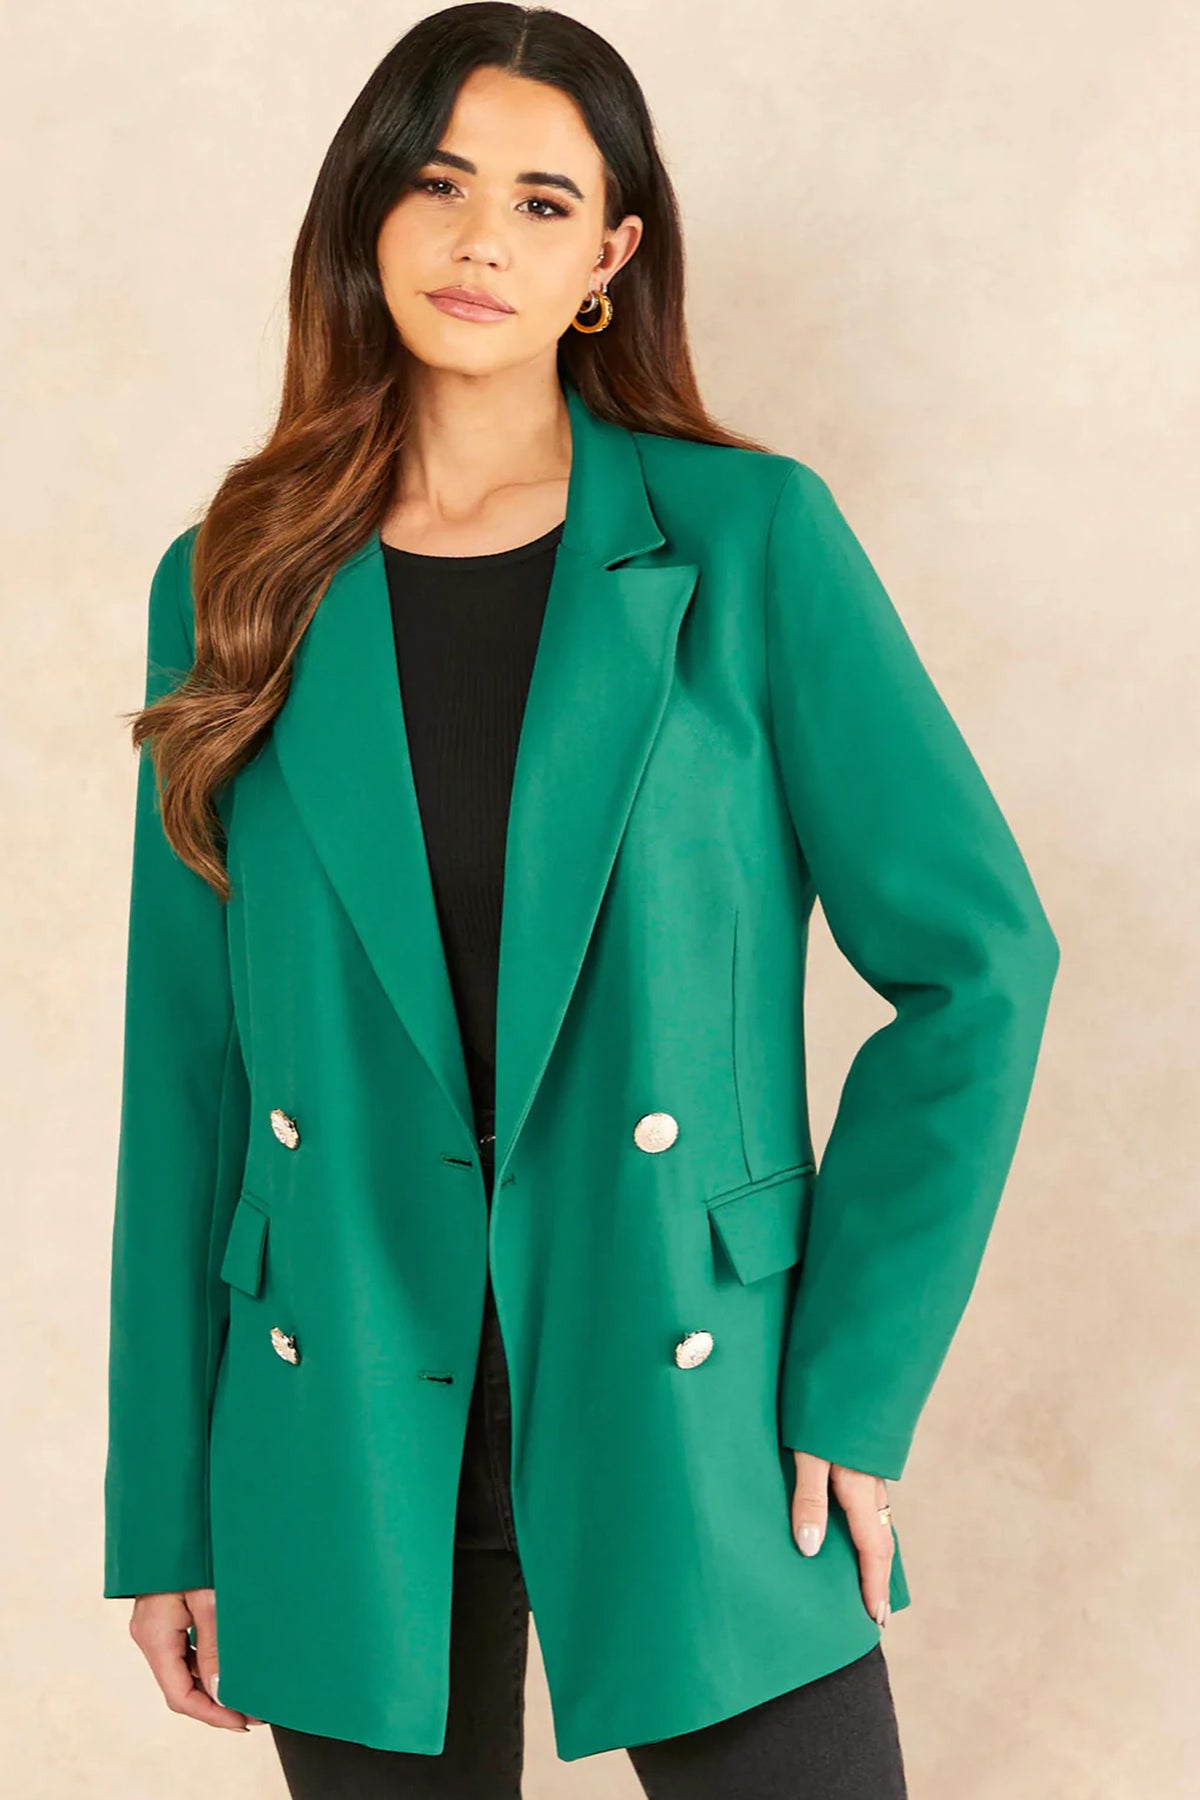 jenerique green oversized blazer